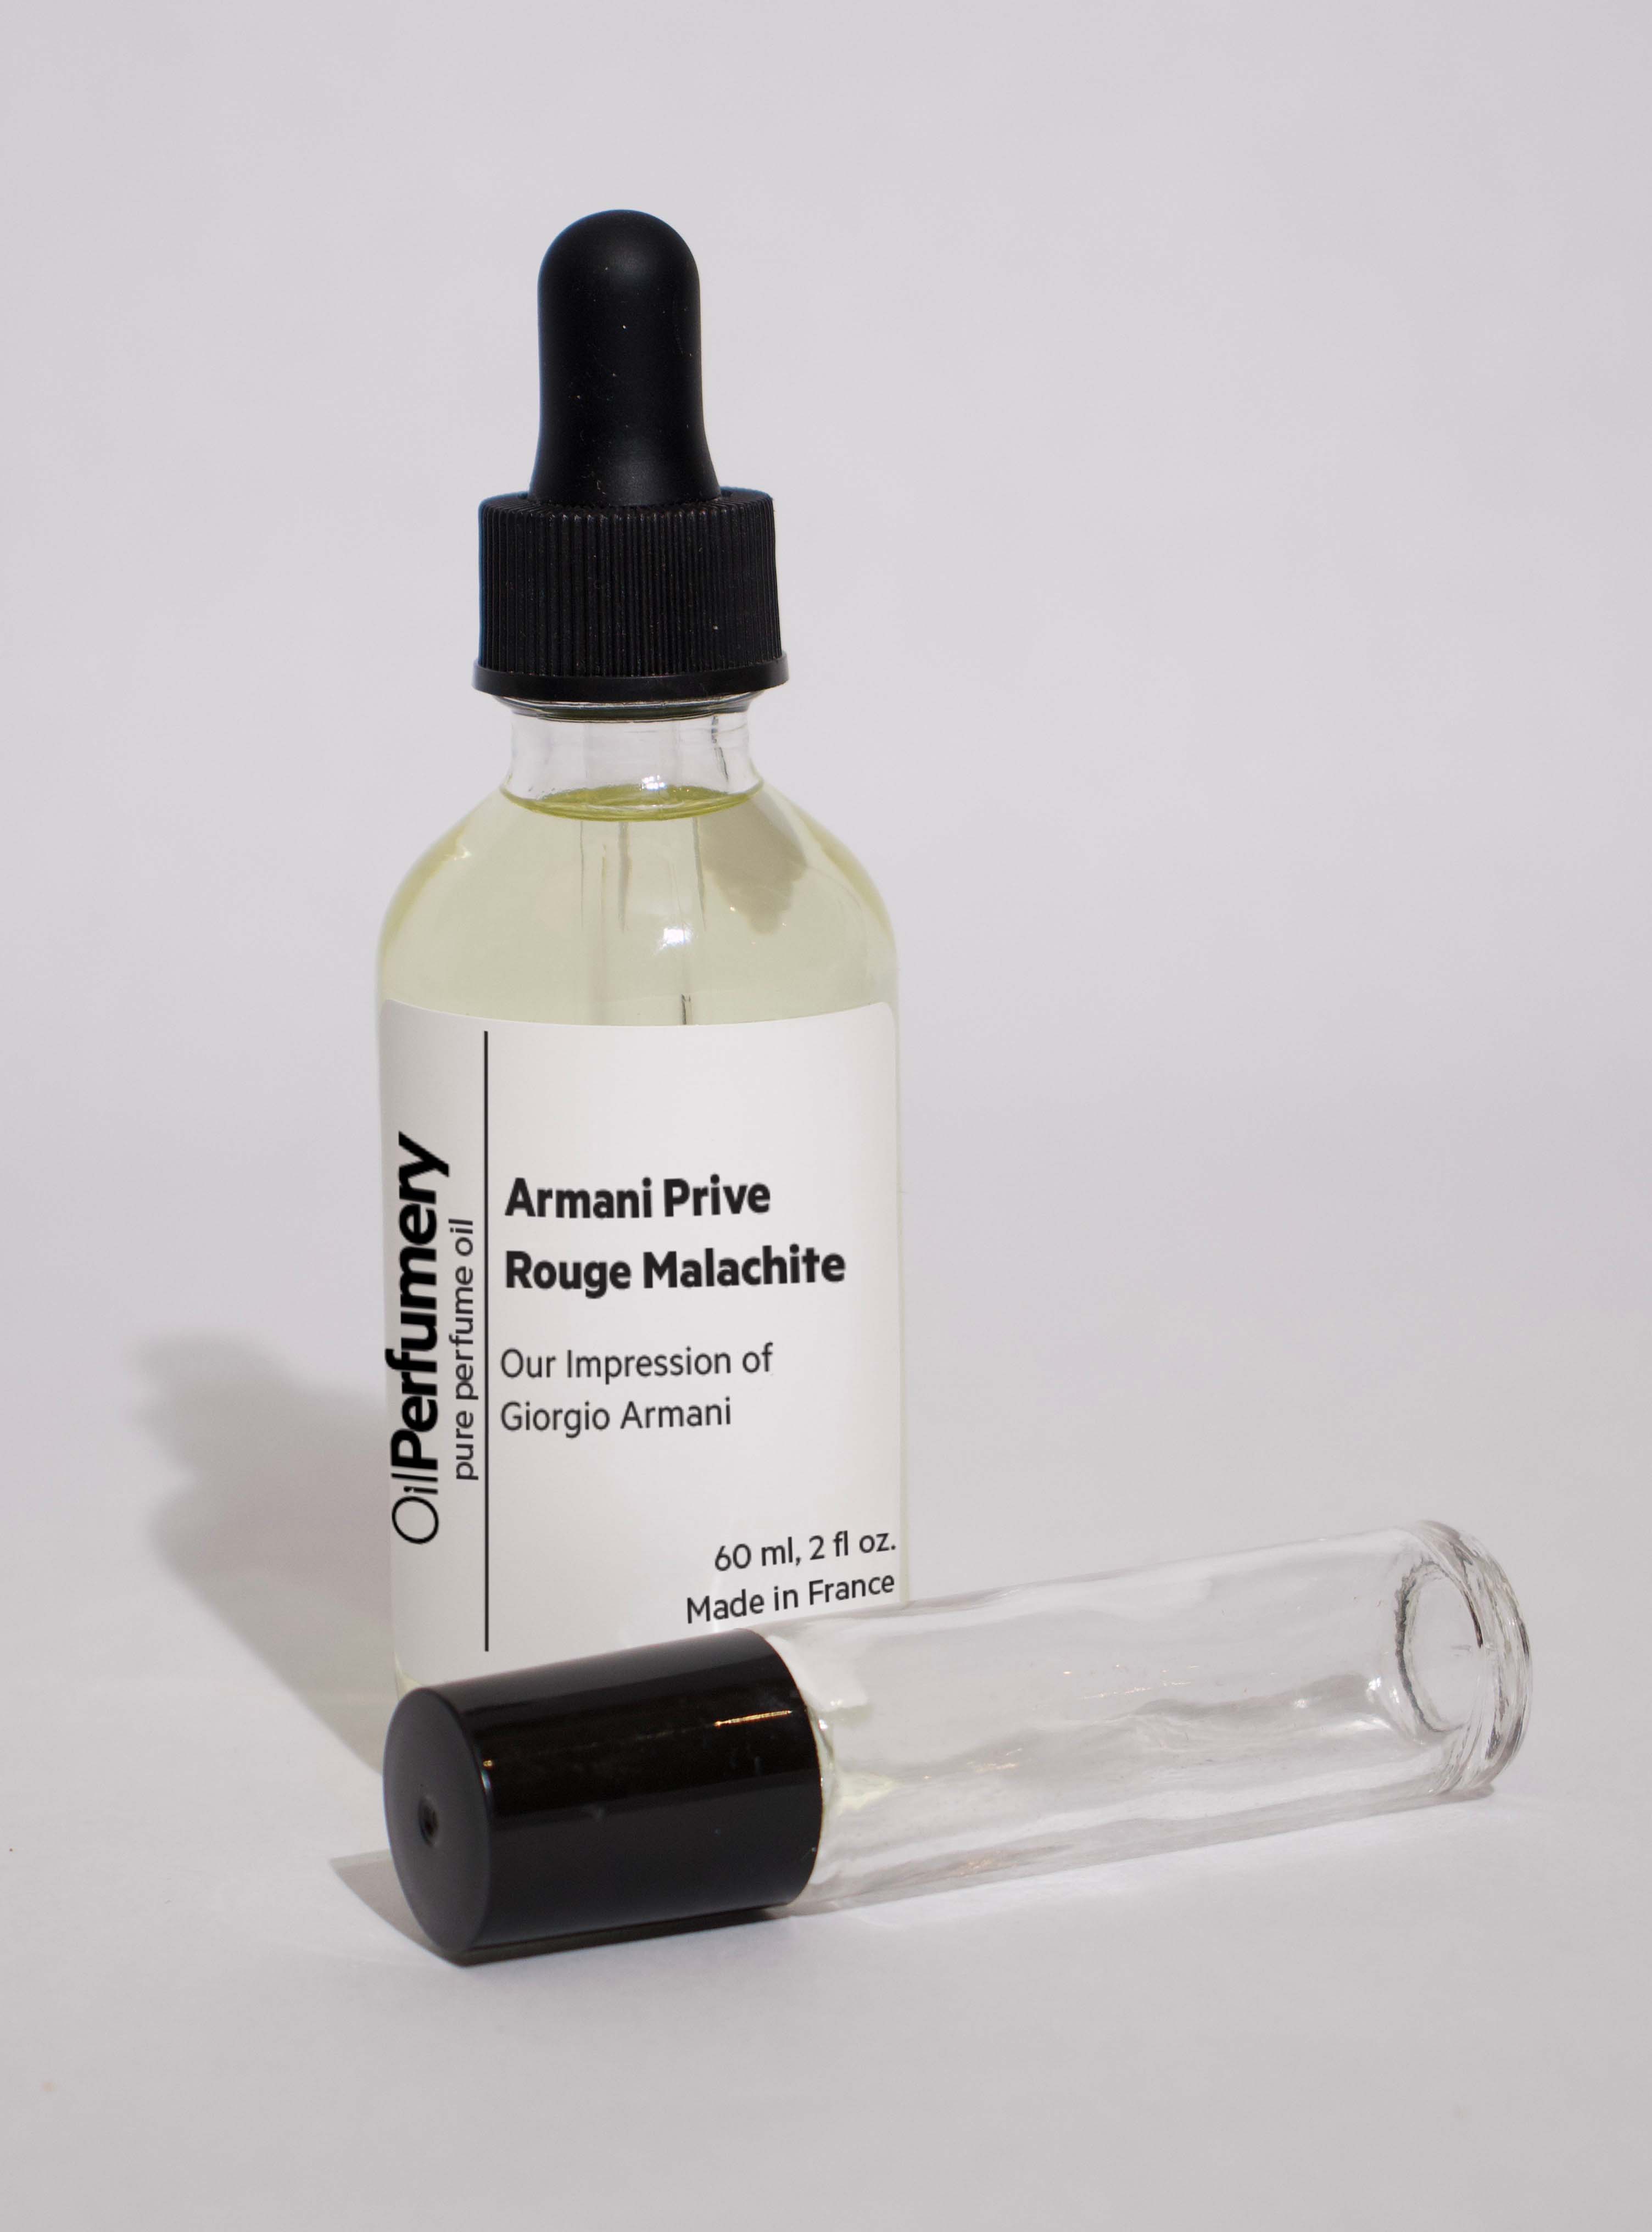 Oil Perfumery Impression of Giorgio Armani - Armani Prive Rouge Malachite